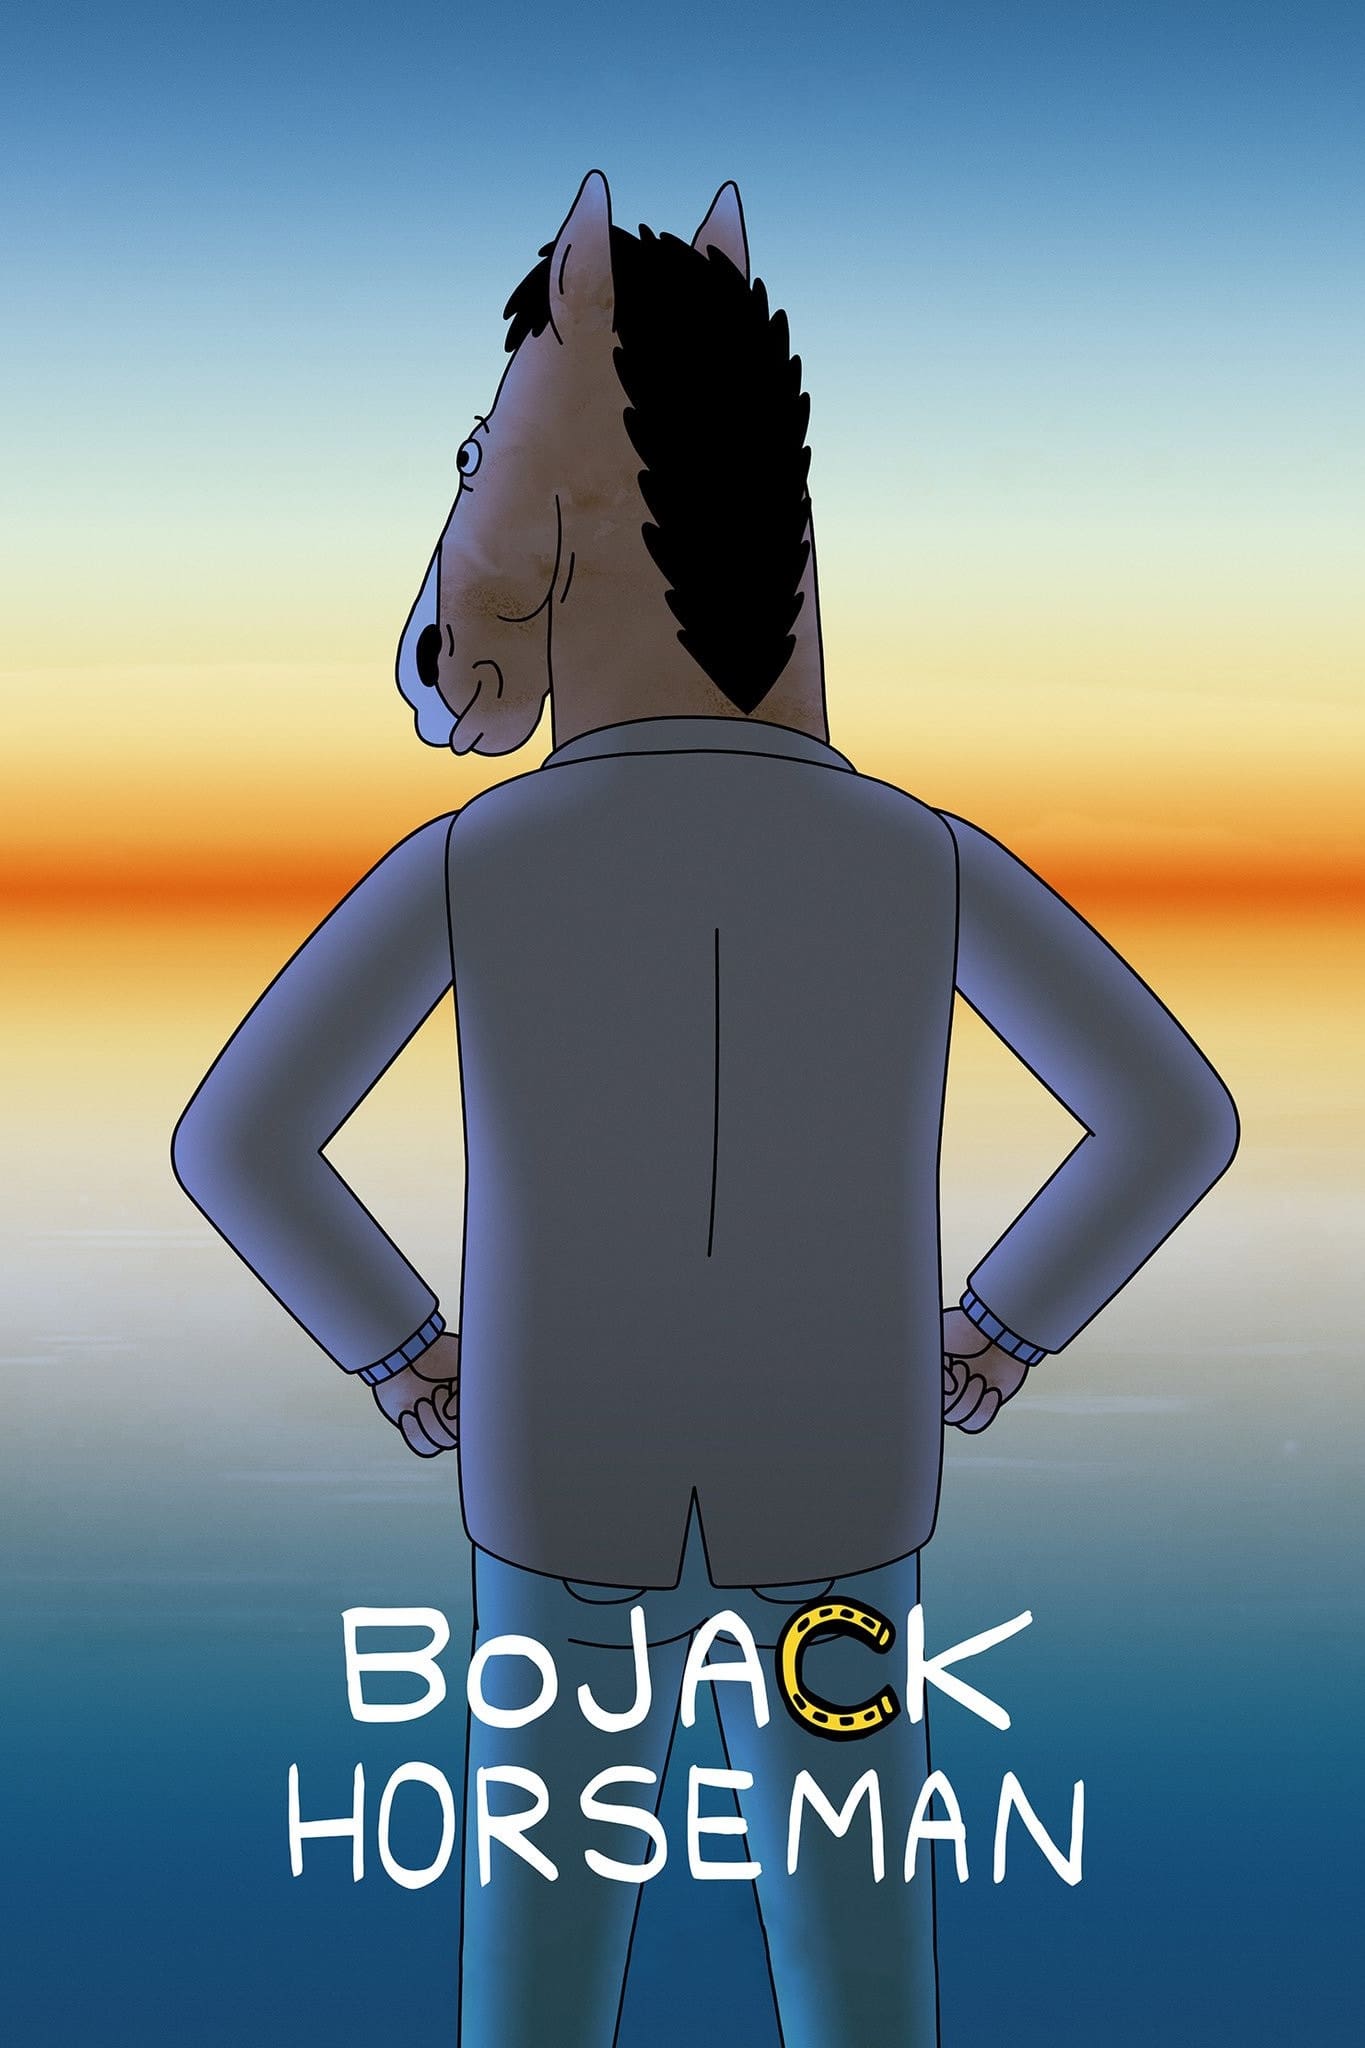 BoJack Horseman TV Shows About Horse